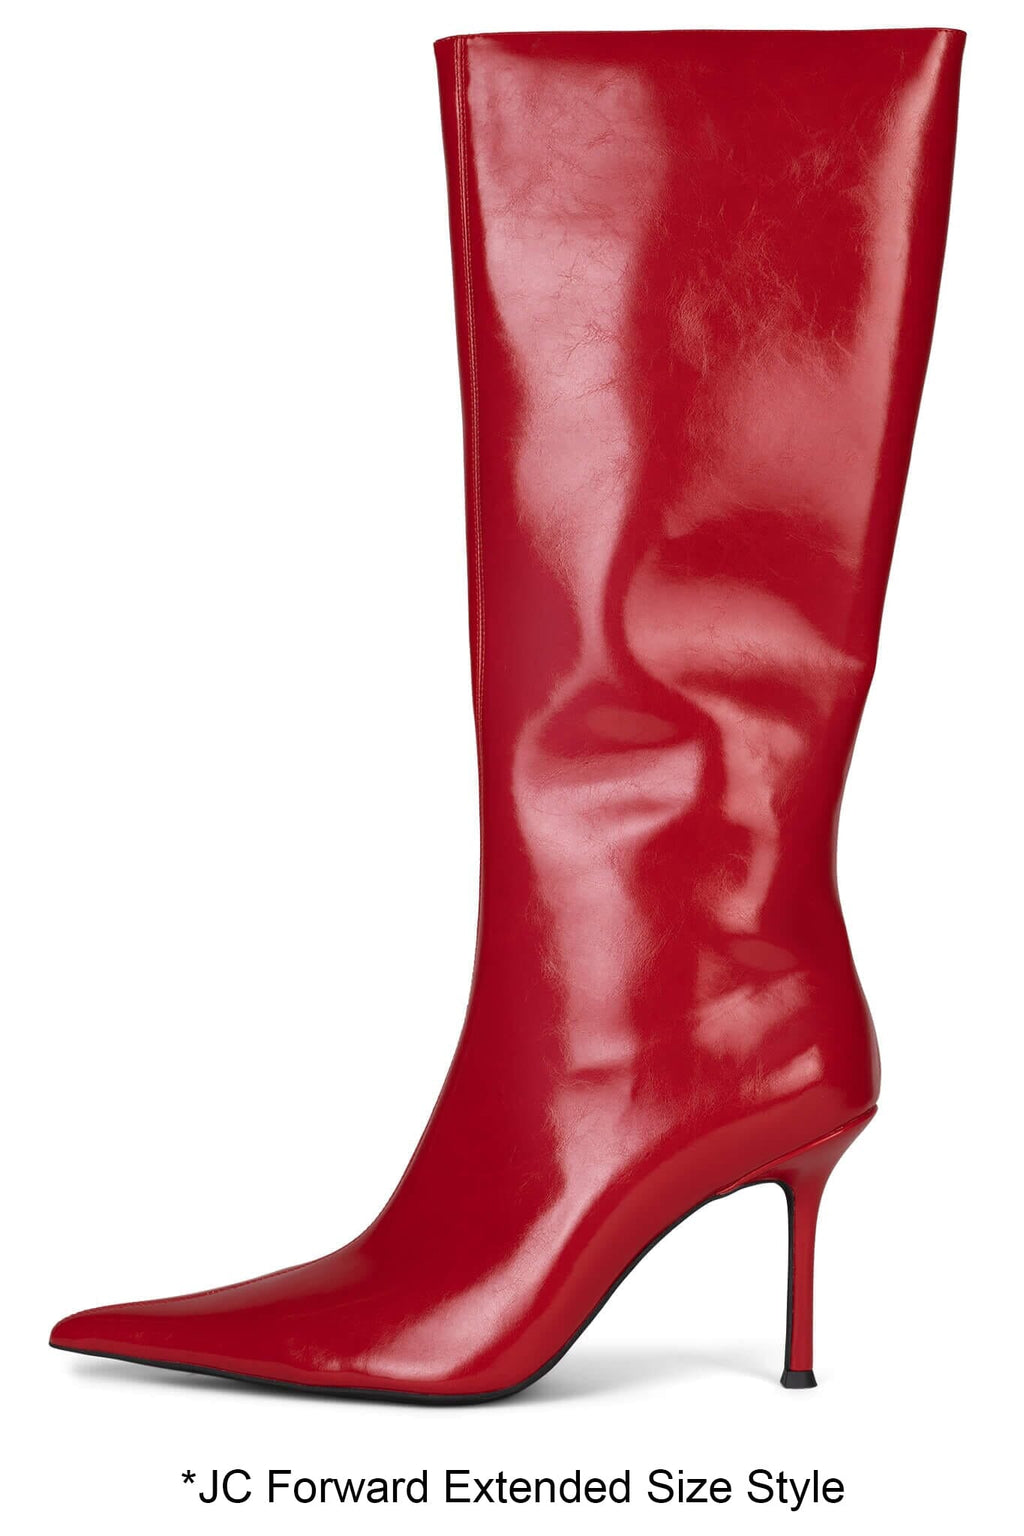 MY-DARLIN Knee-High Boot YYH Red 12 